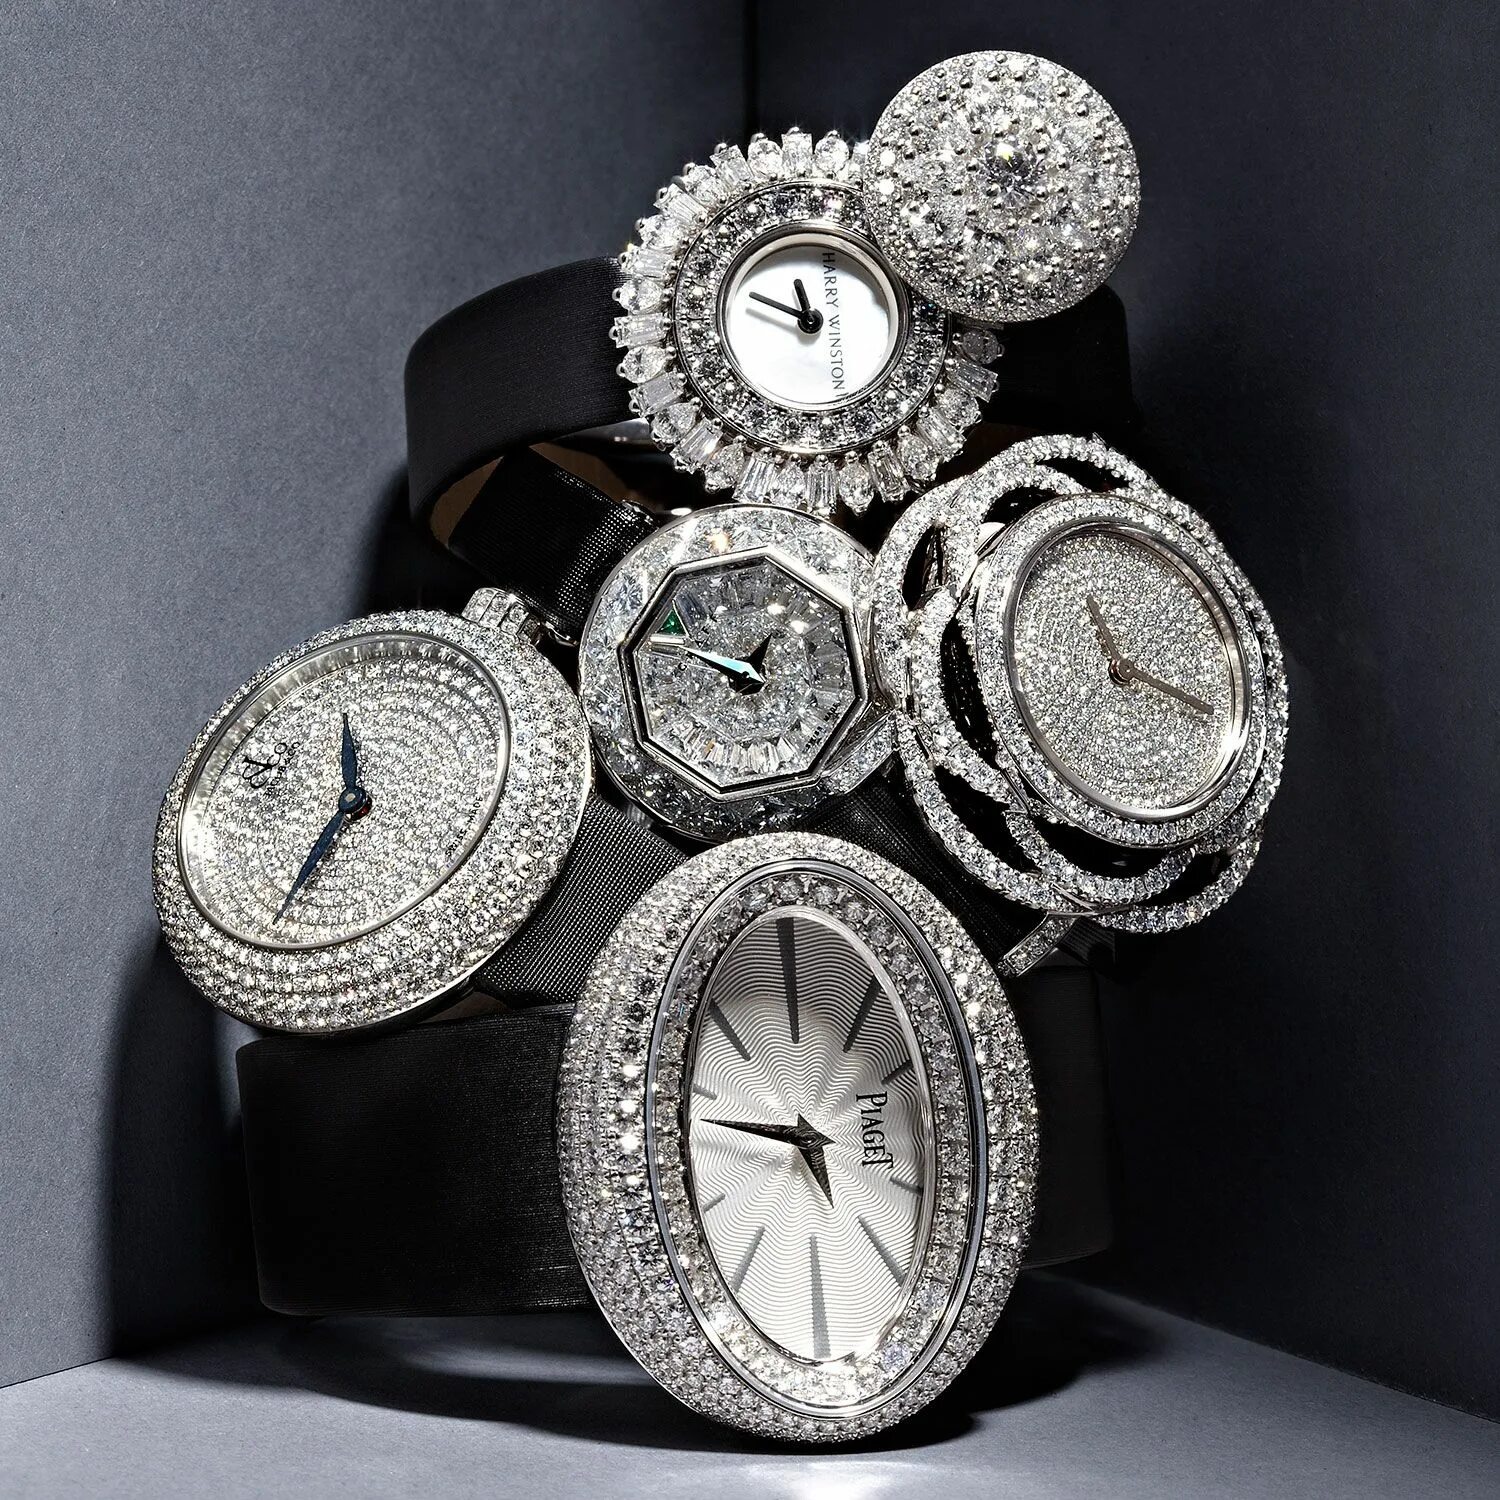 Бижутерия часы. Akins Jewelry часы. Часы бижутерия складные. Часы из бижутерии cvars.